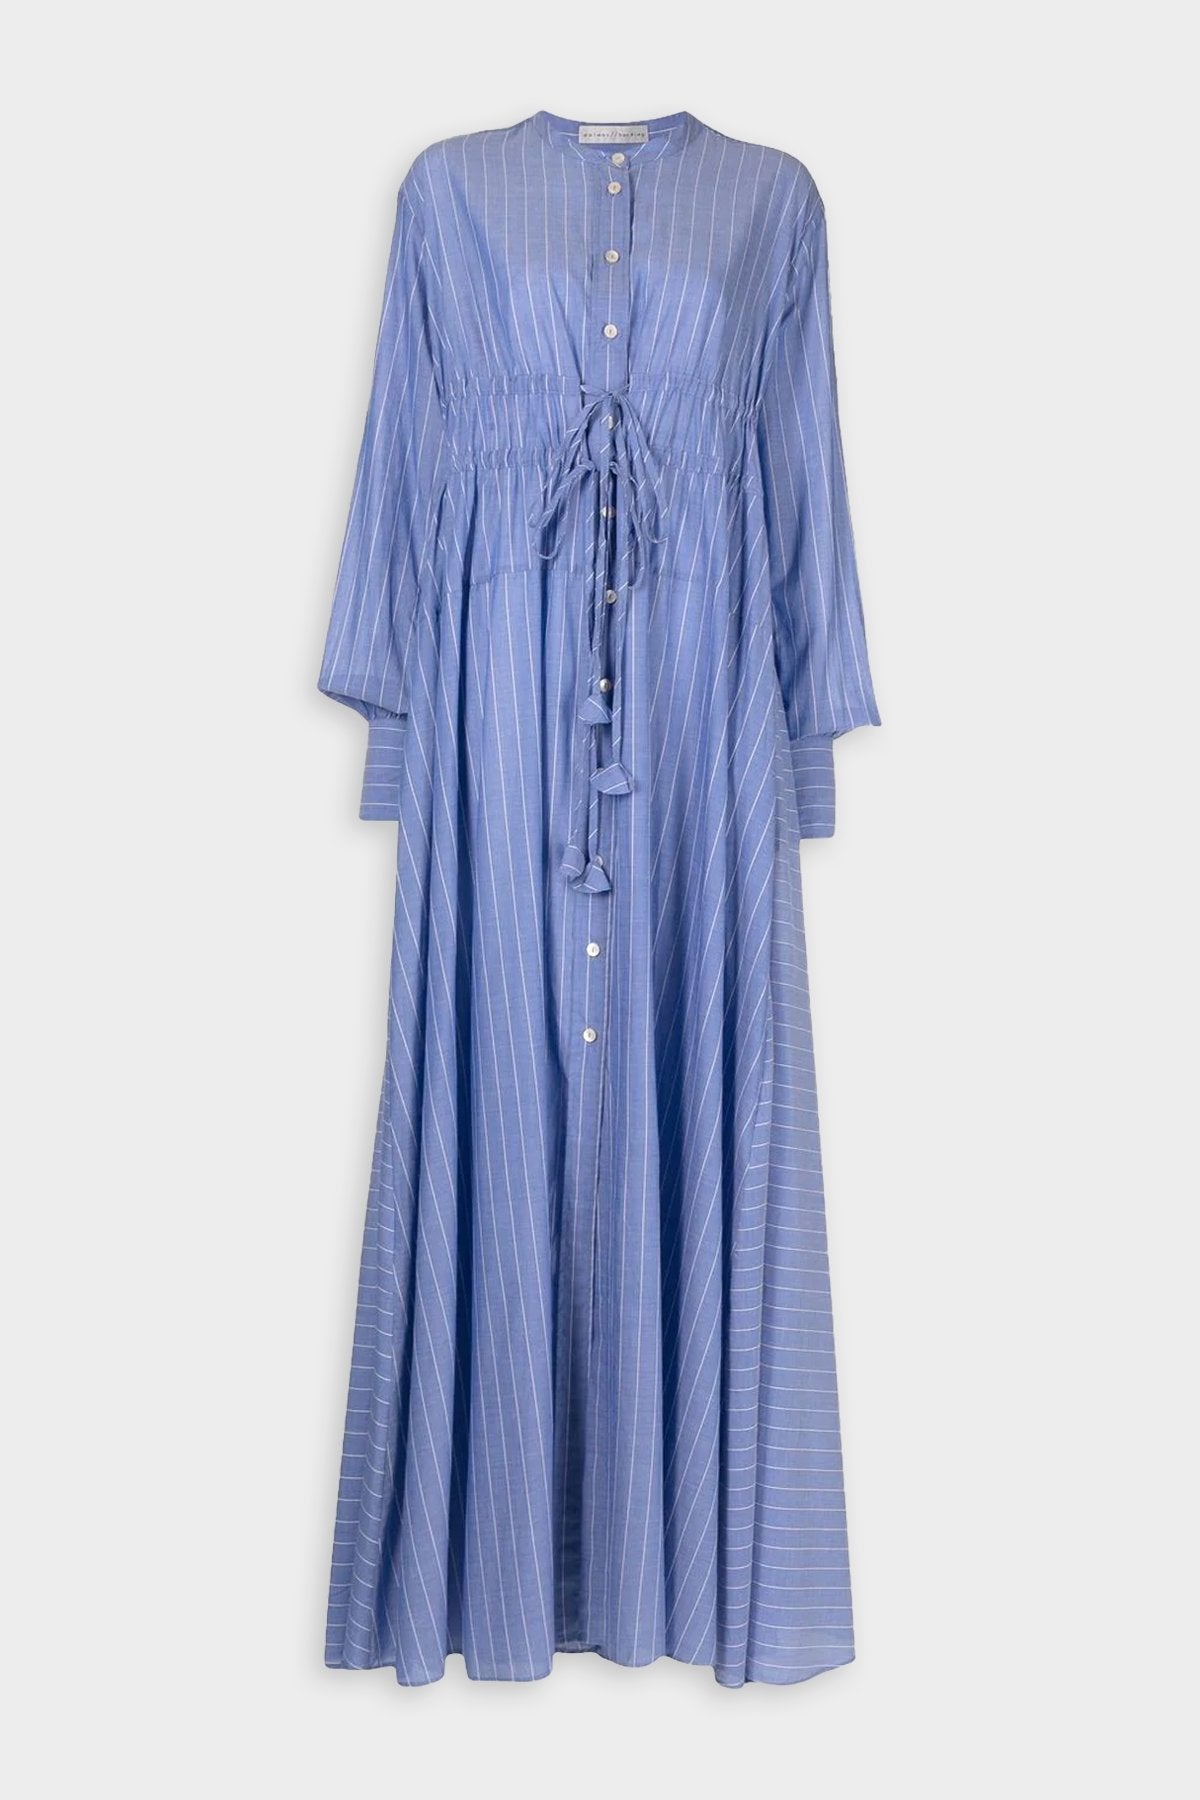 Clarity Dress in Blue Chalk Stripe Voile - shop-olivia.com